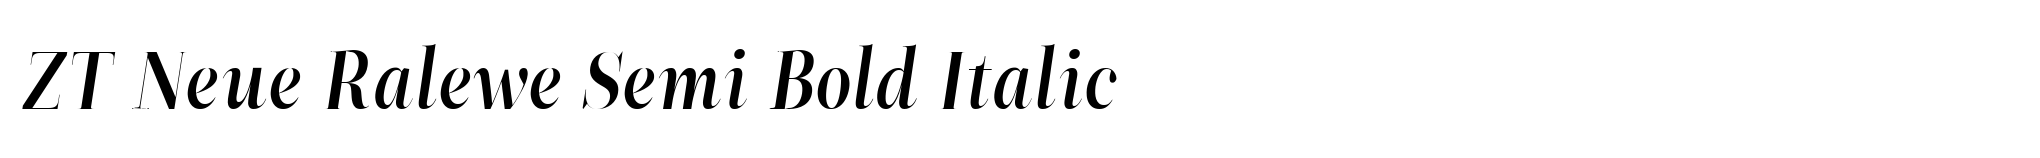 ZT Neue Ralewe Semi Bold Italic image